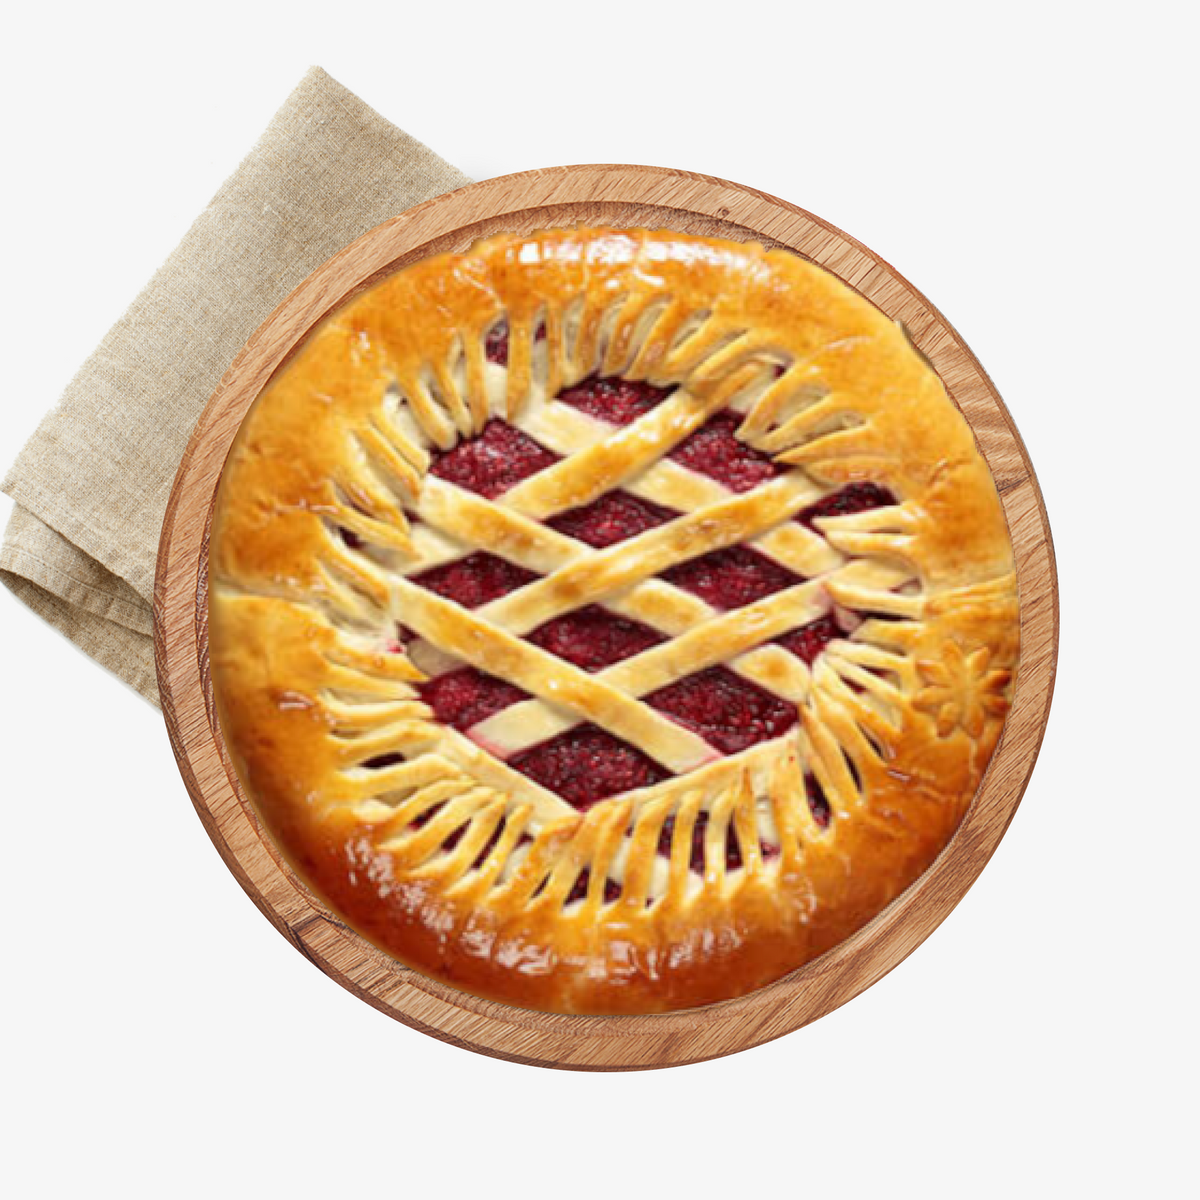 Raspberry pie / 2.20 Lbs